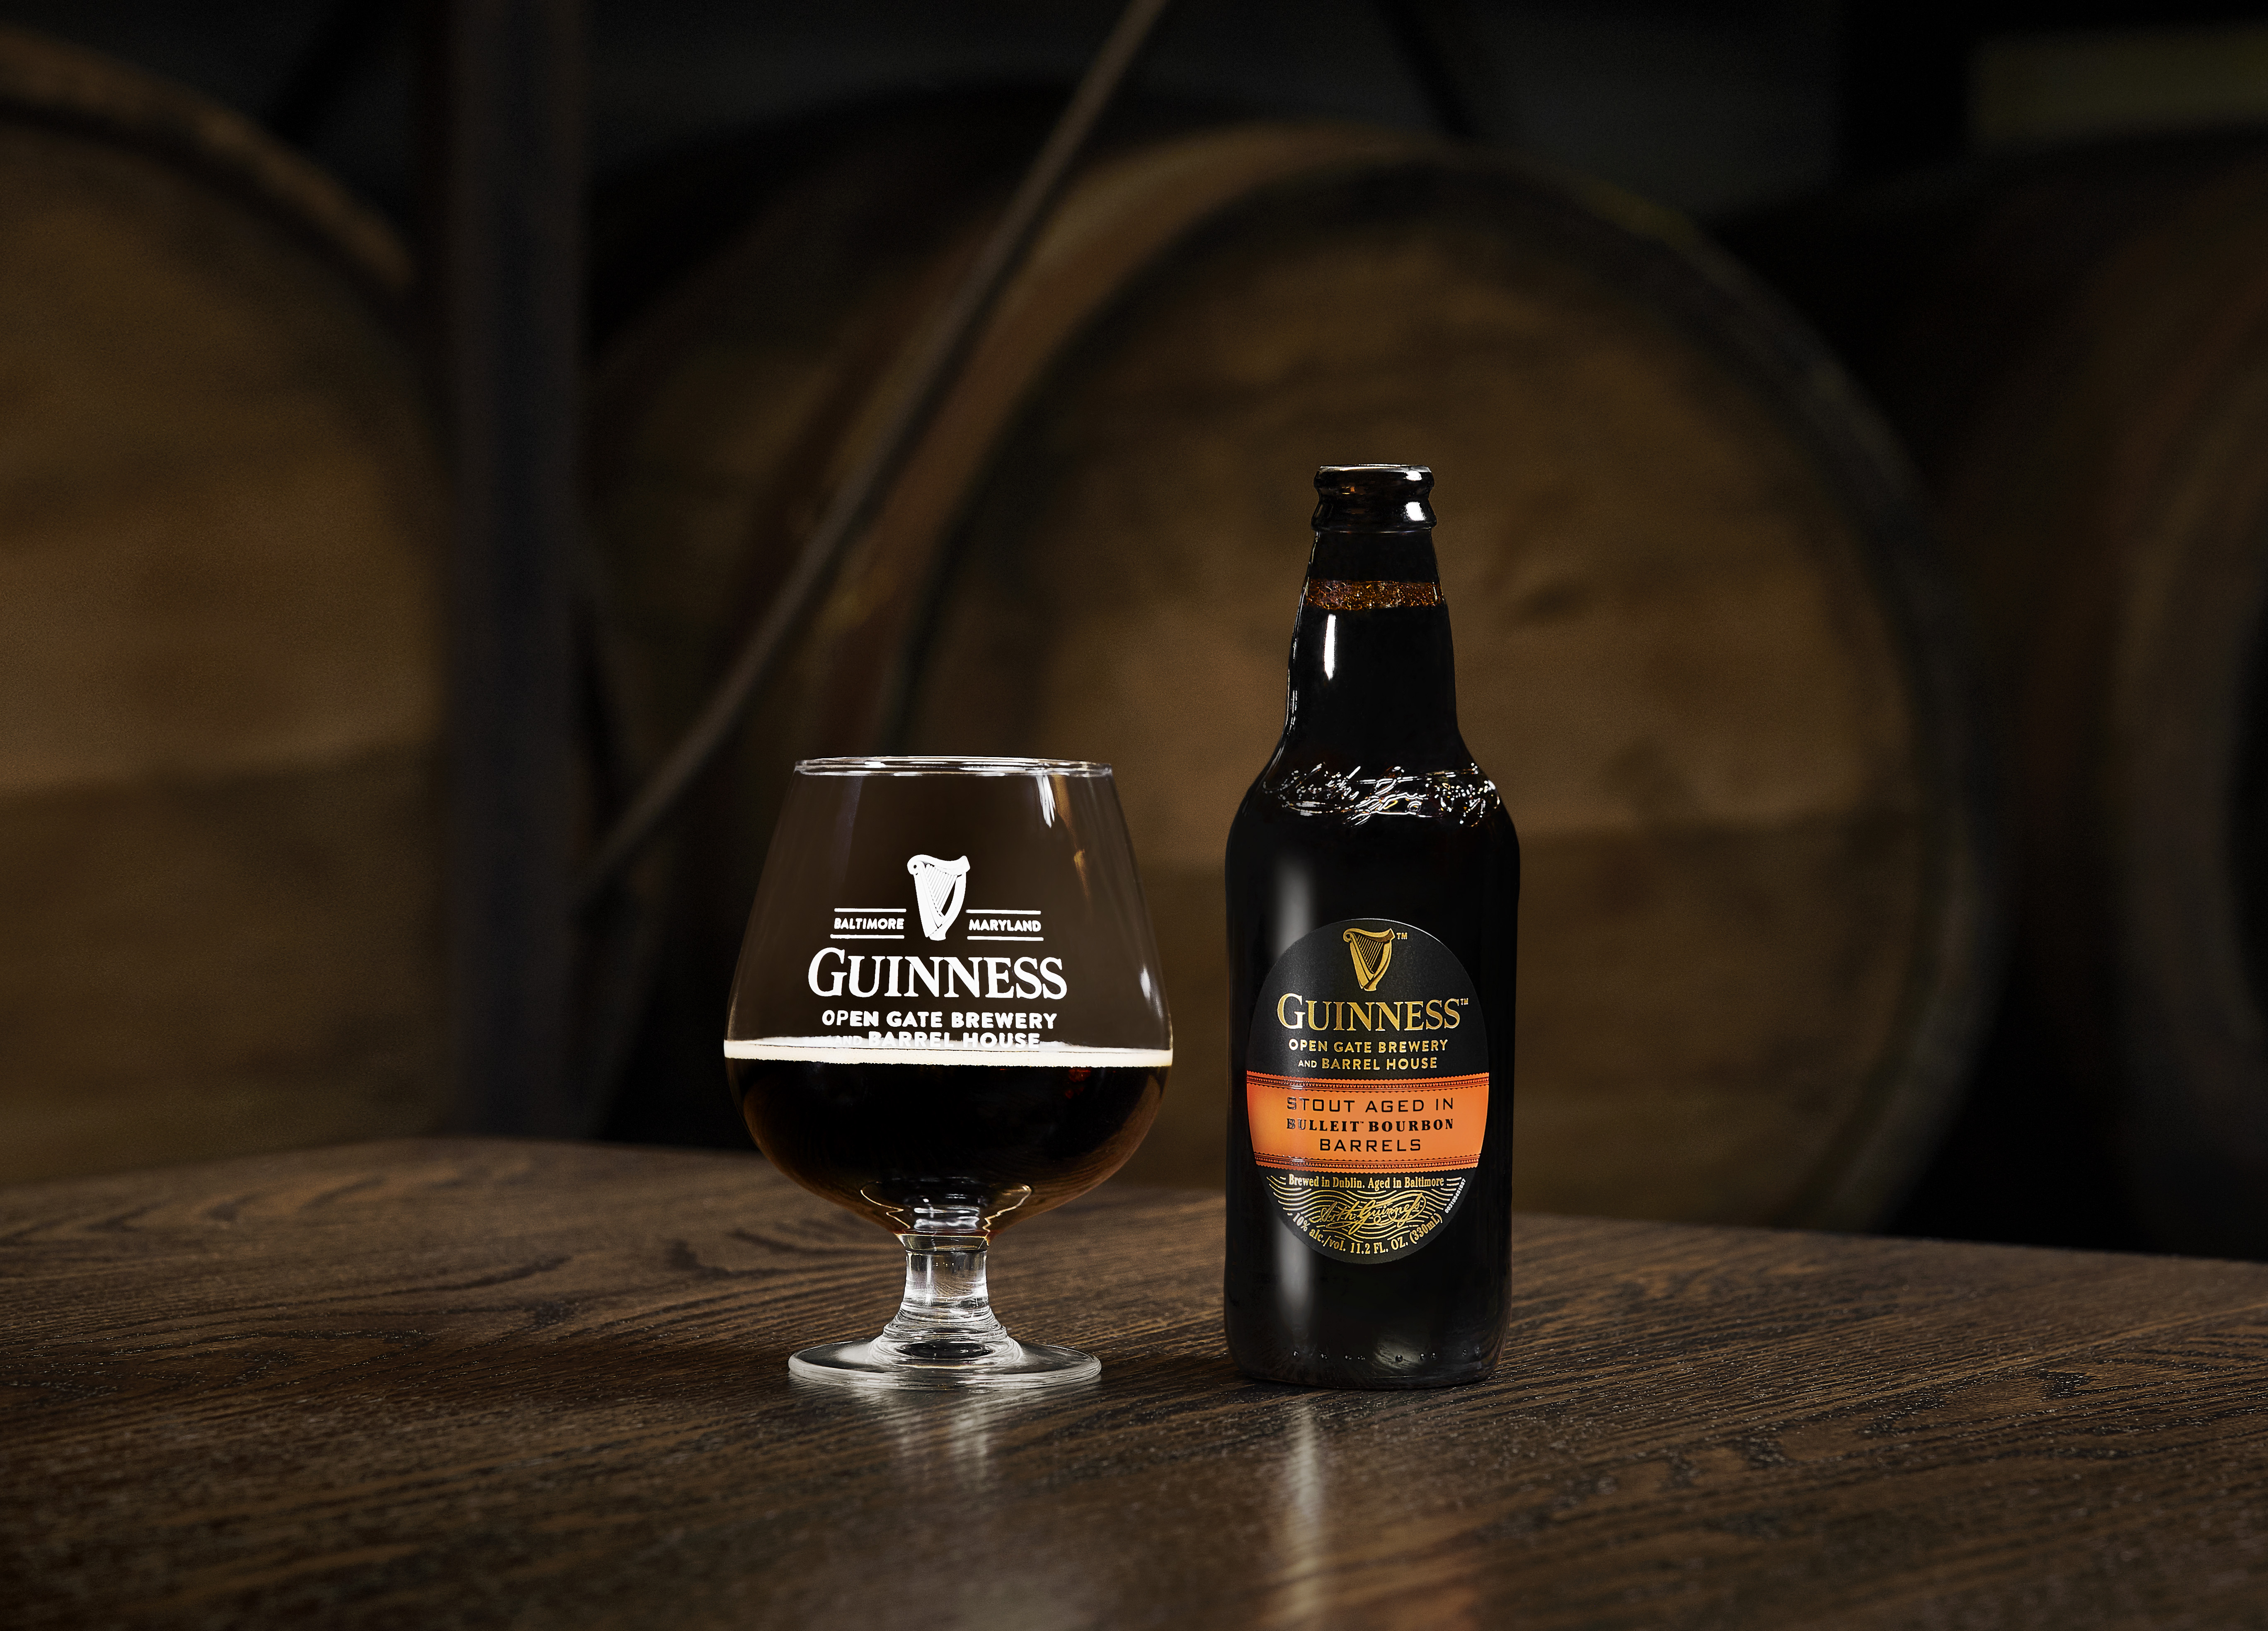 Guinness Stout Aged in Bulleit Bourbon Barrels. (image courtesy of Guinness)